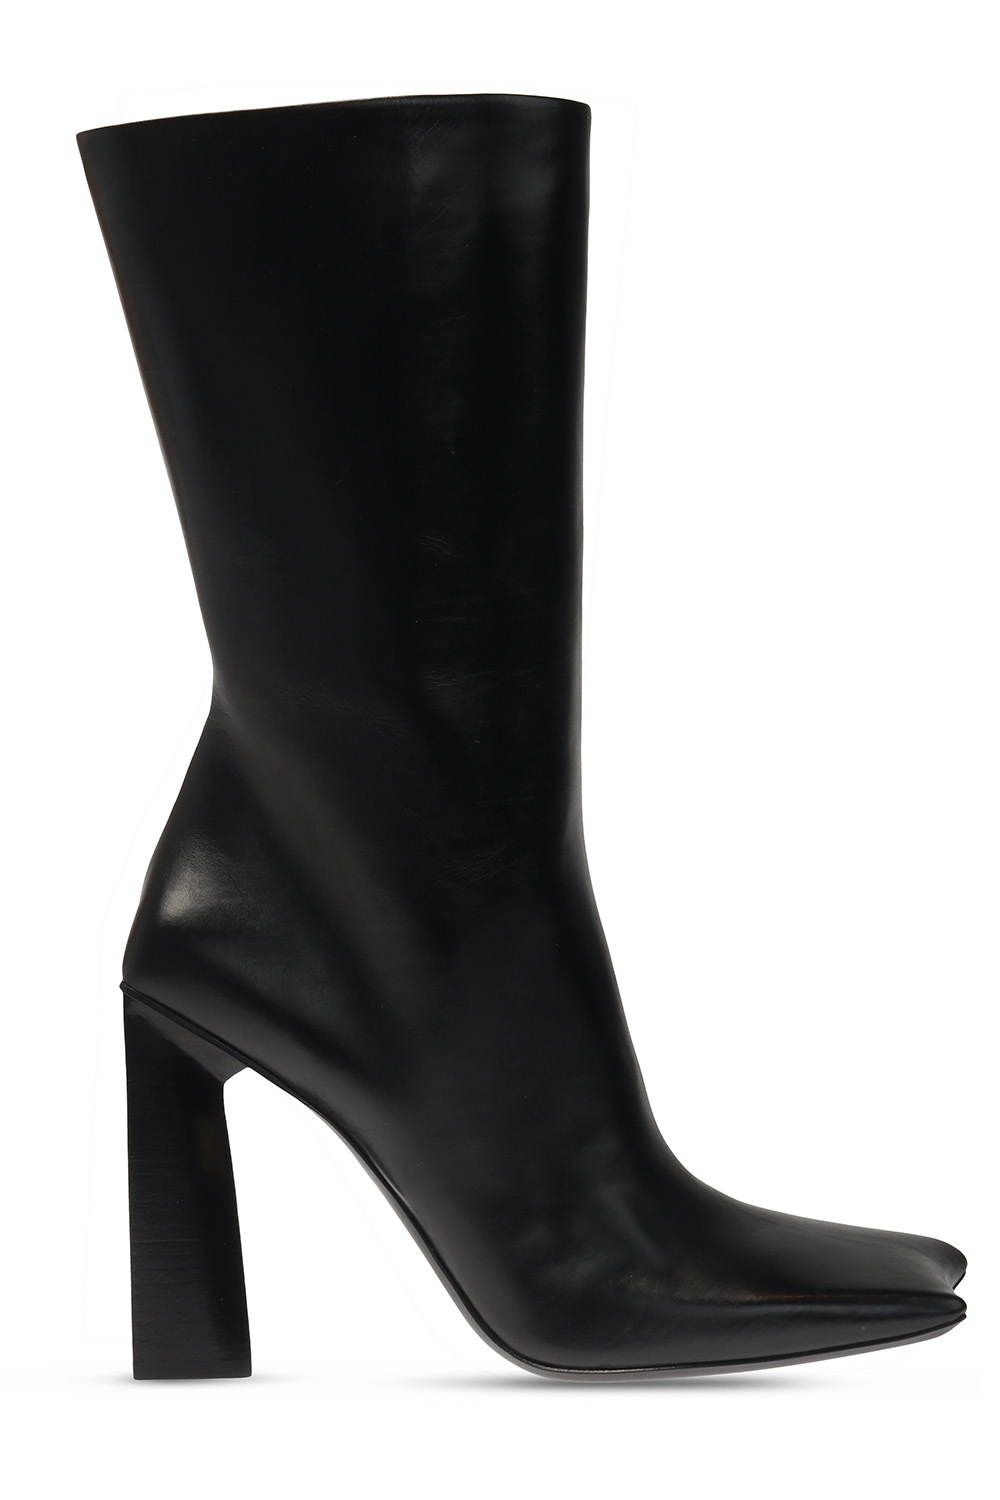 ‘Moon’ leather boots Balenciaga - Vitkac Italy